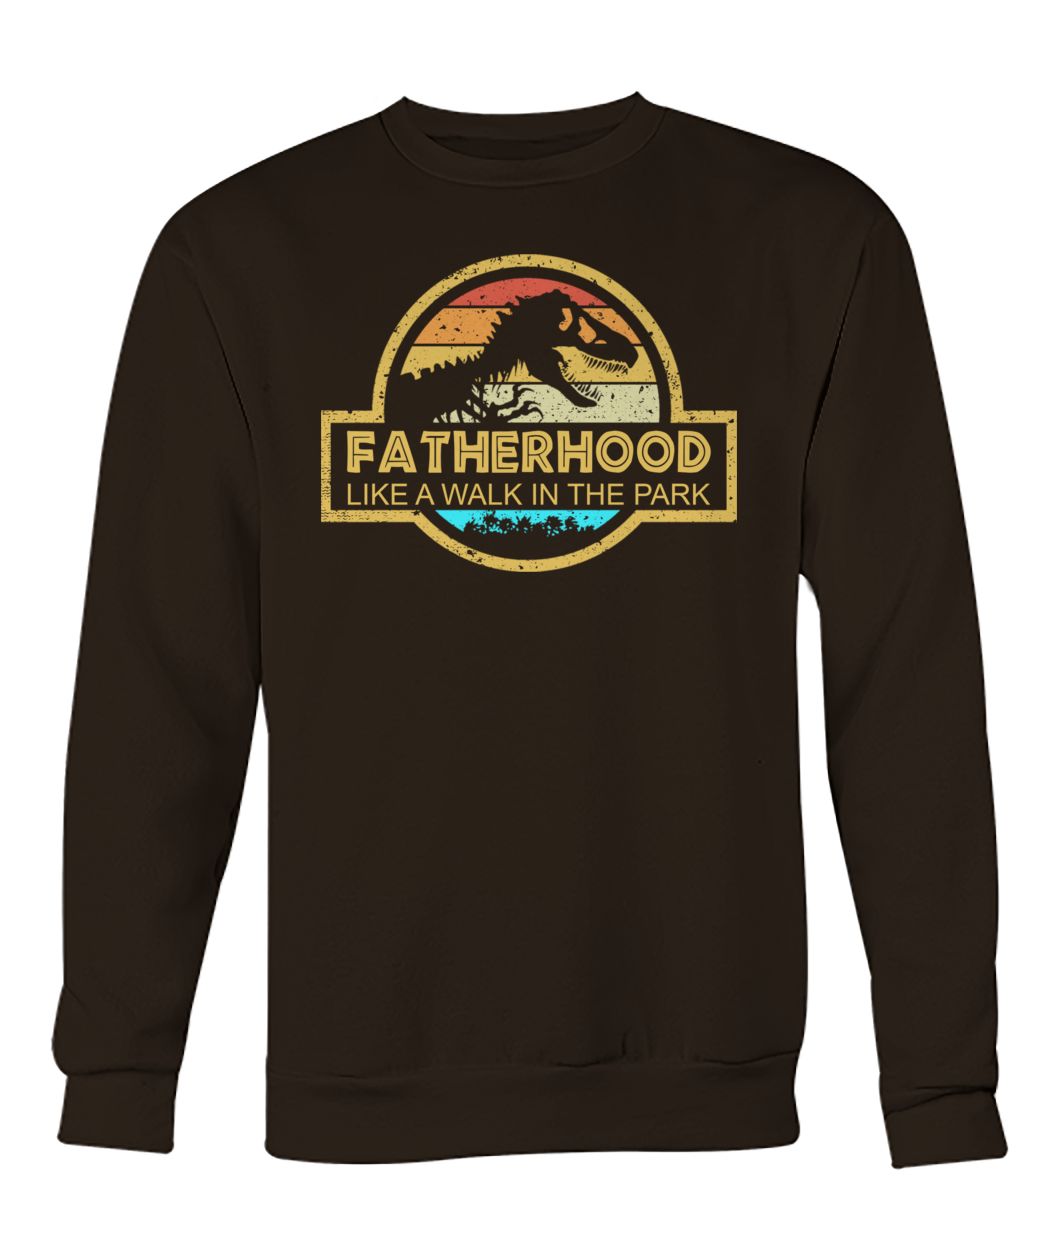 Vintage fatherhood like a walk in the park crew neck sweatshirt